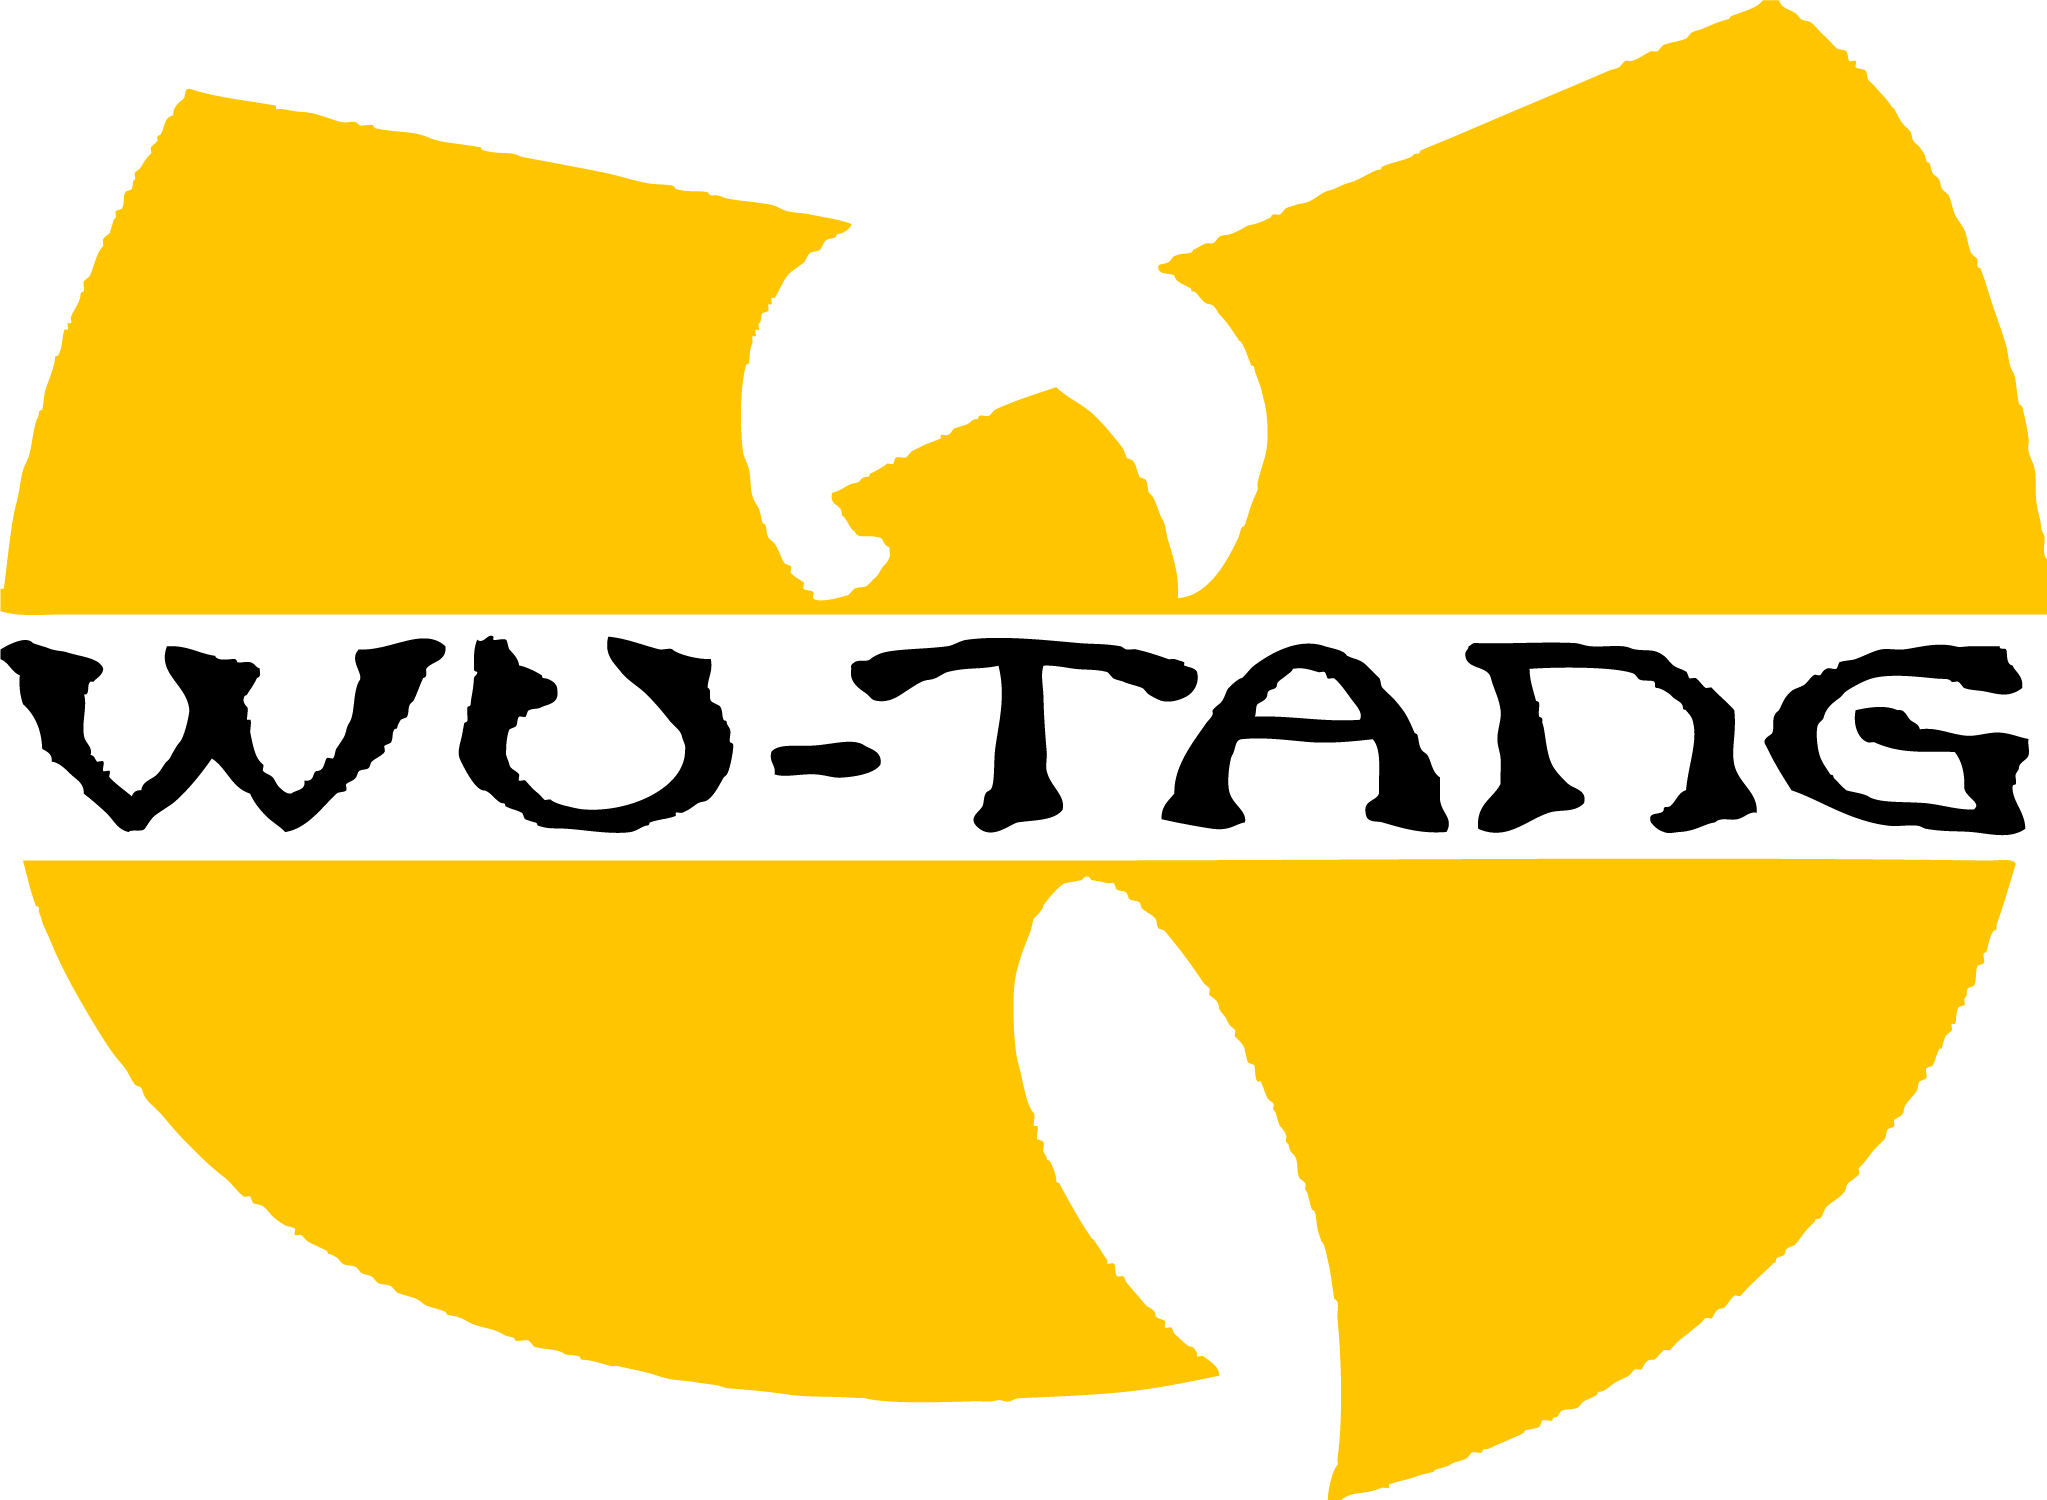 Wu-Tang Logo - Wu Tang Clan PNG Transparent Wu Tang Clan.PNG Images. | PlusPNG